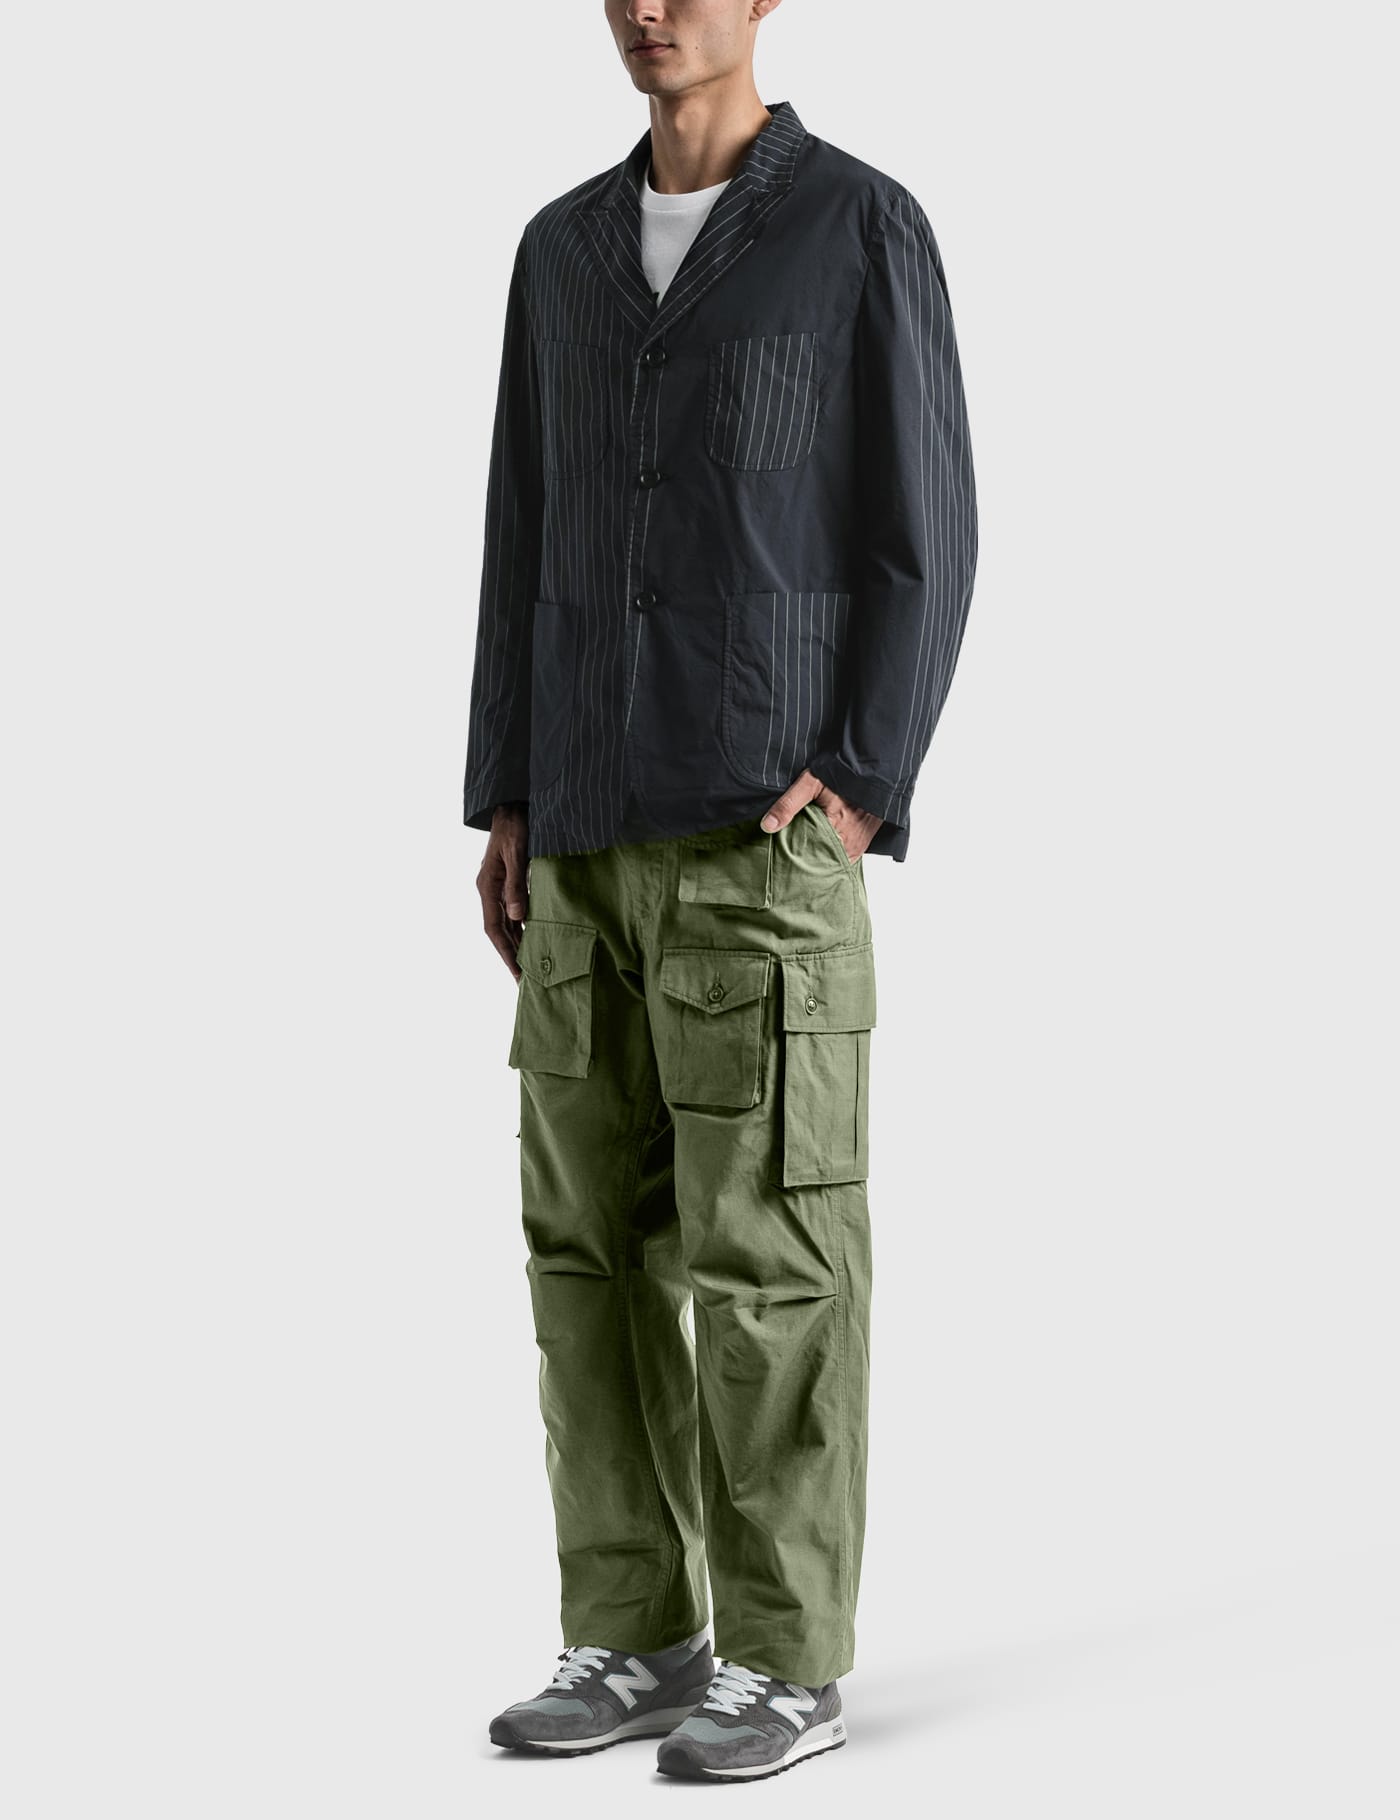 Engineered Garments - FA Pants | HBX - Globally Curated Fashion 